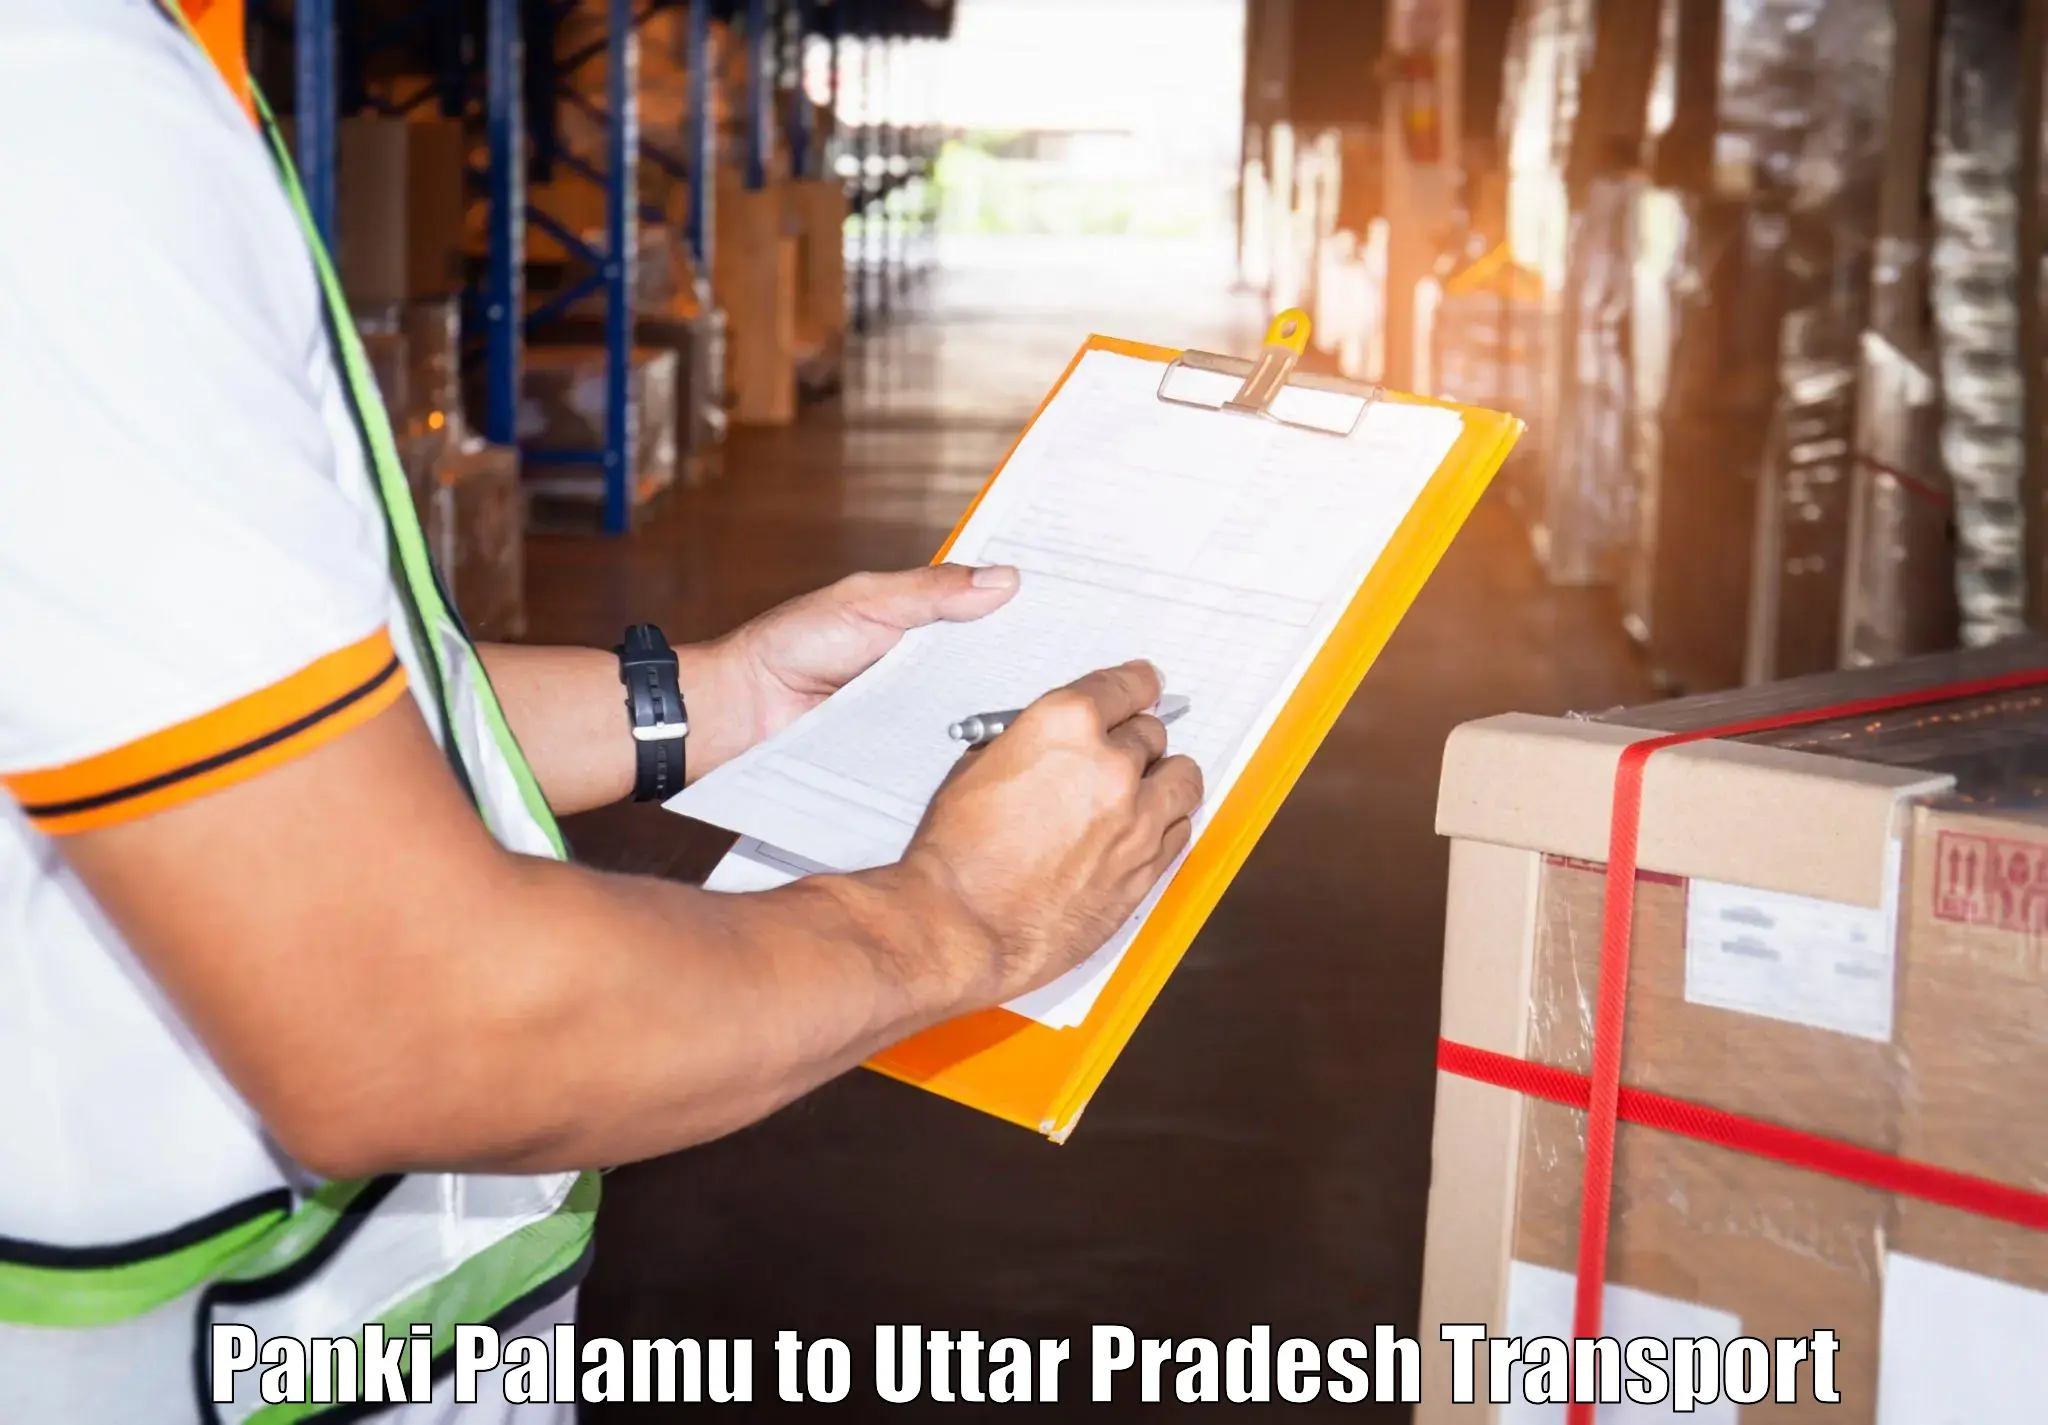 Part load transport service in India Panki Palamu to Pukhrayan